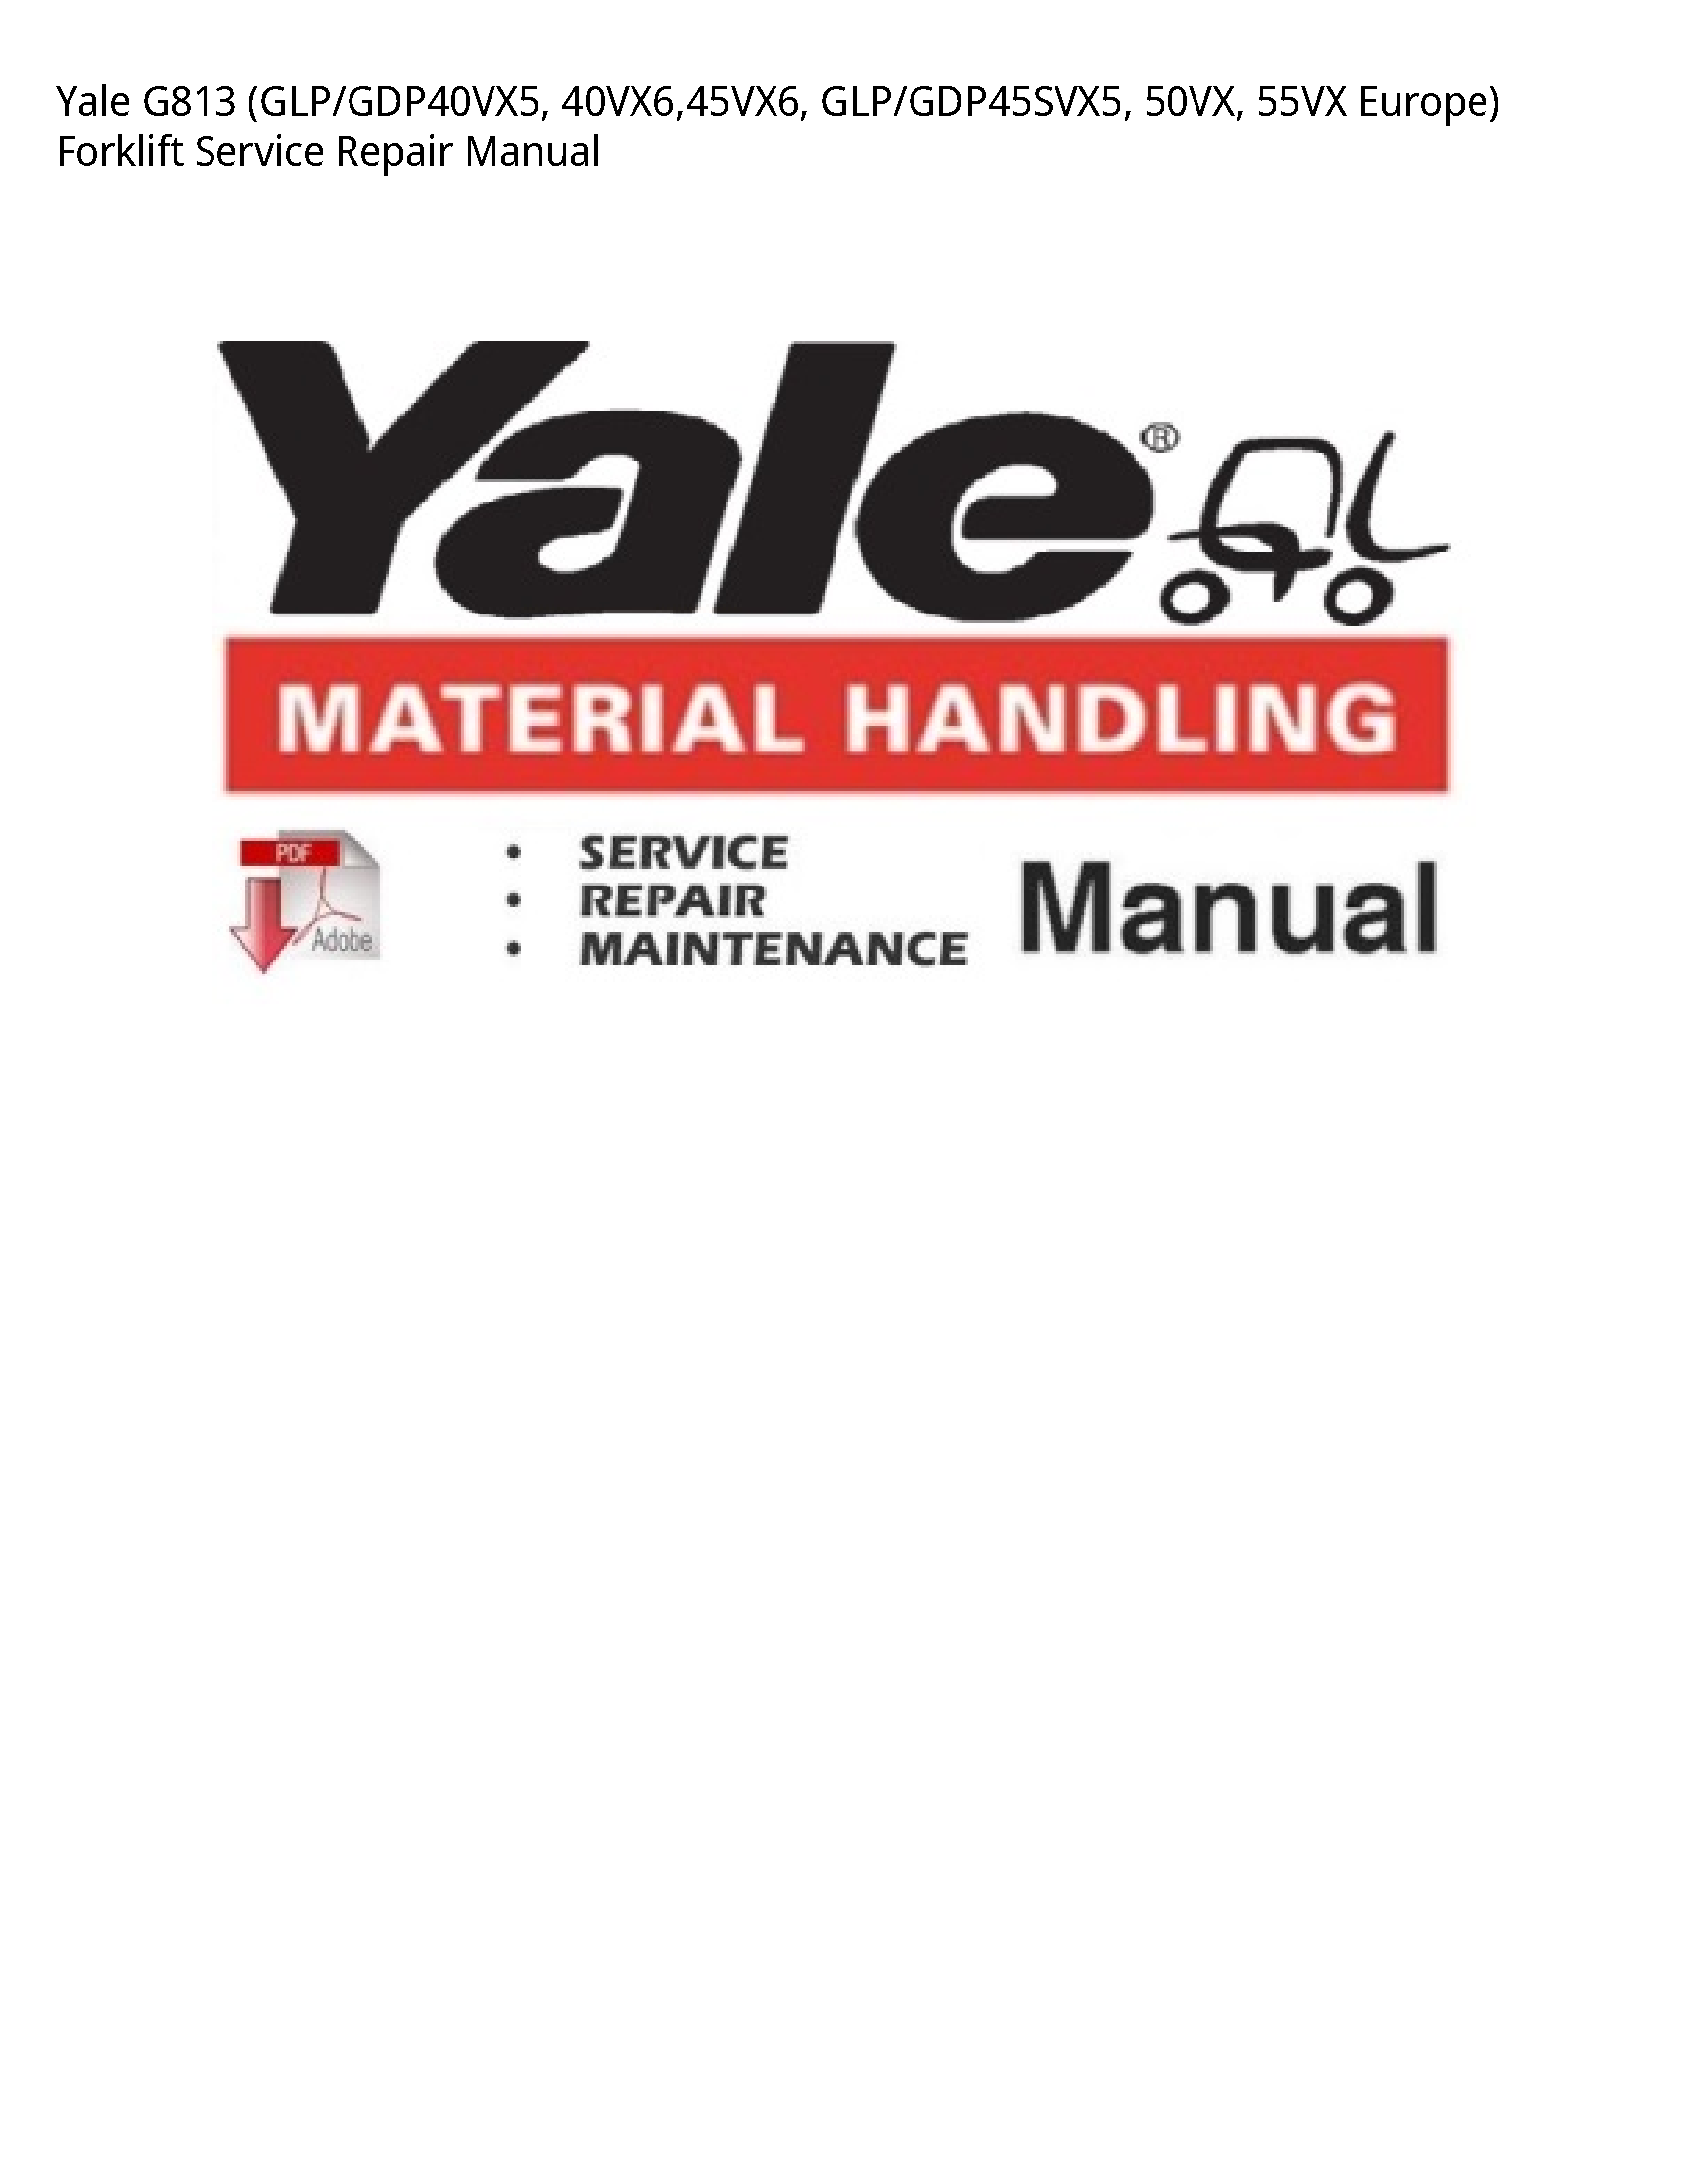 Yale G813 Europe) Forklift manual